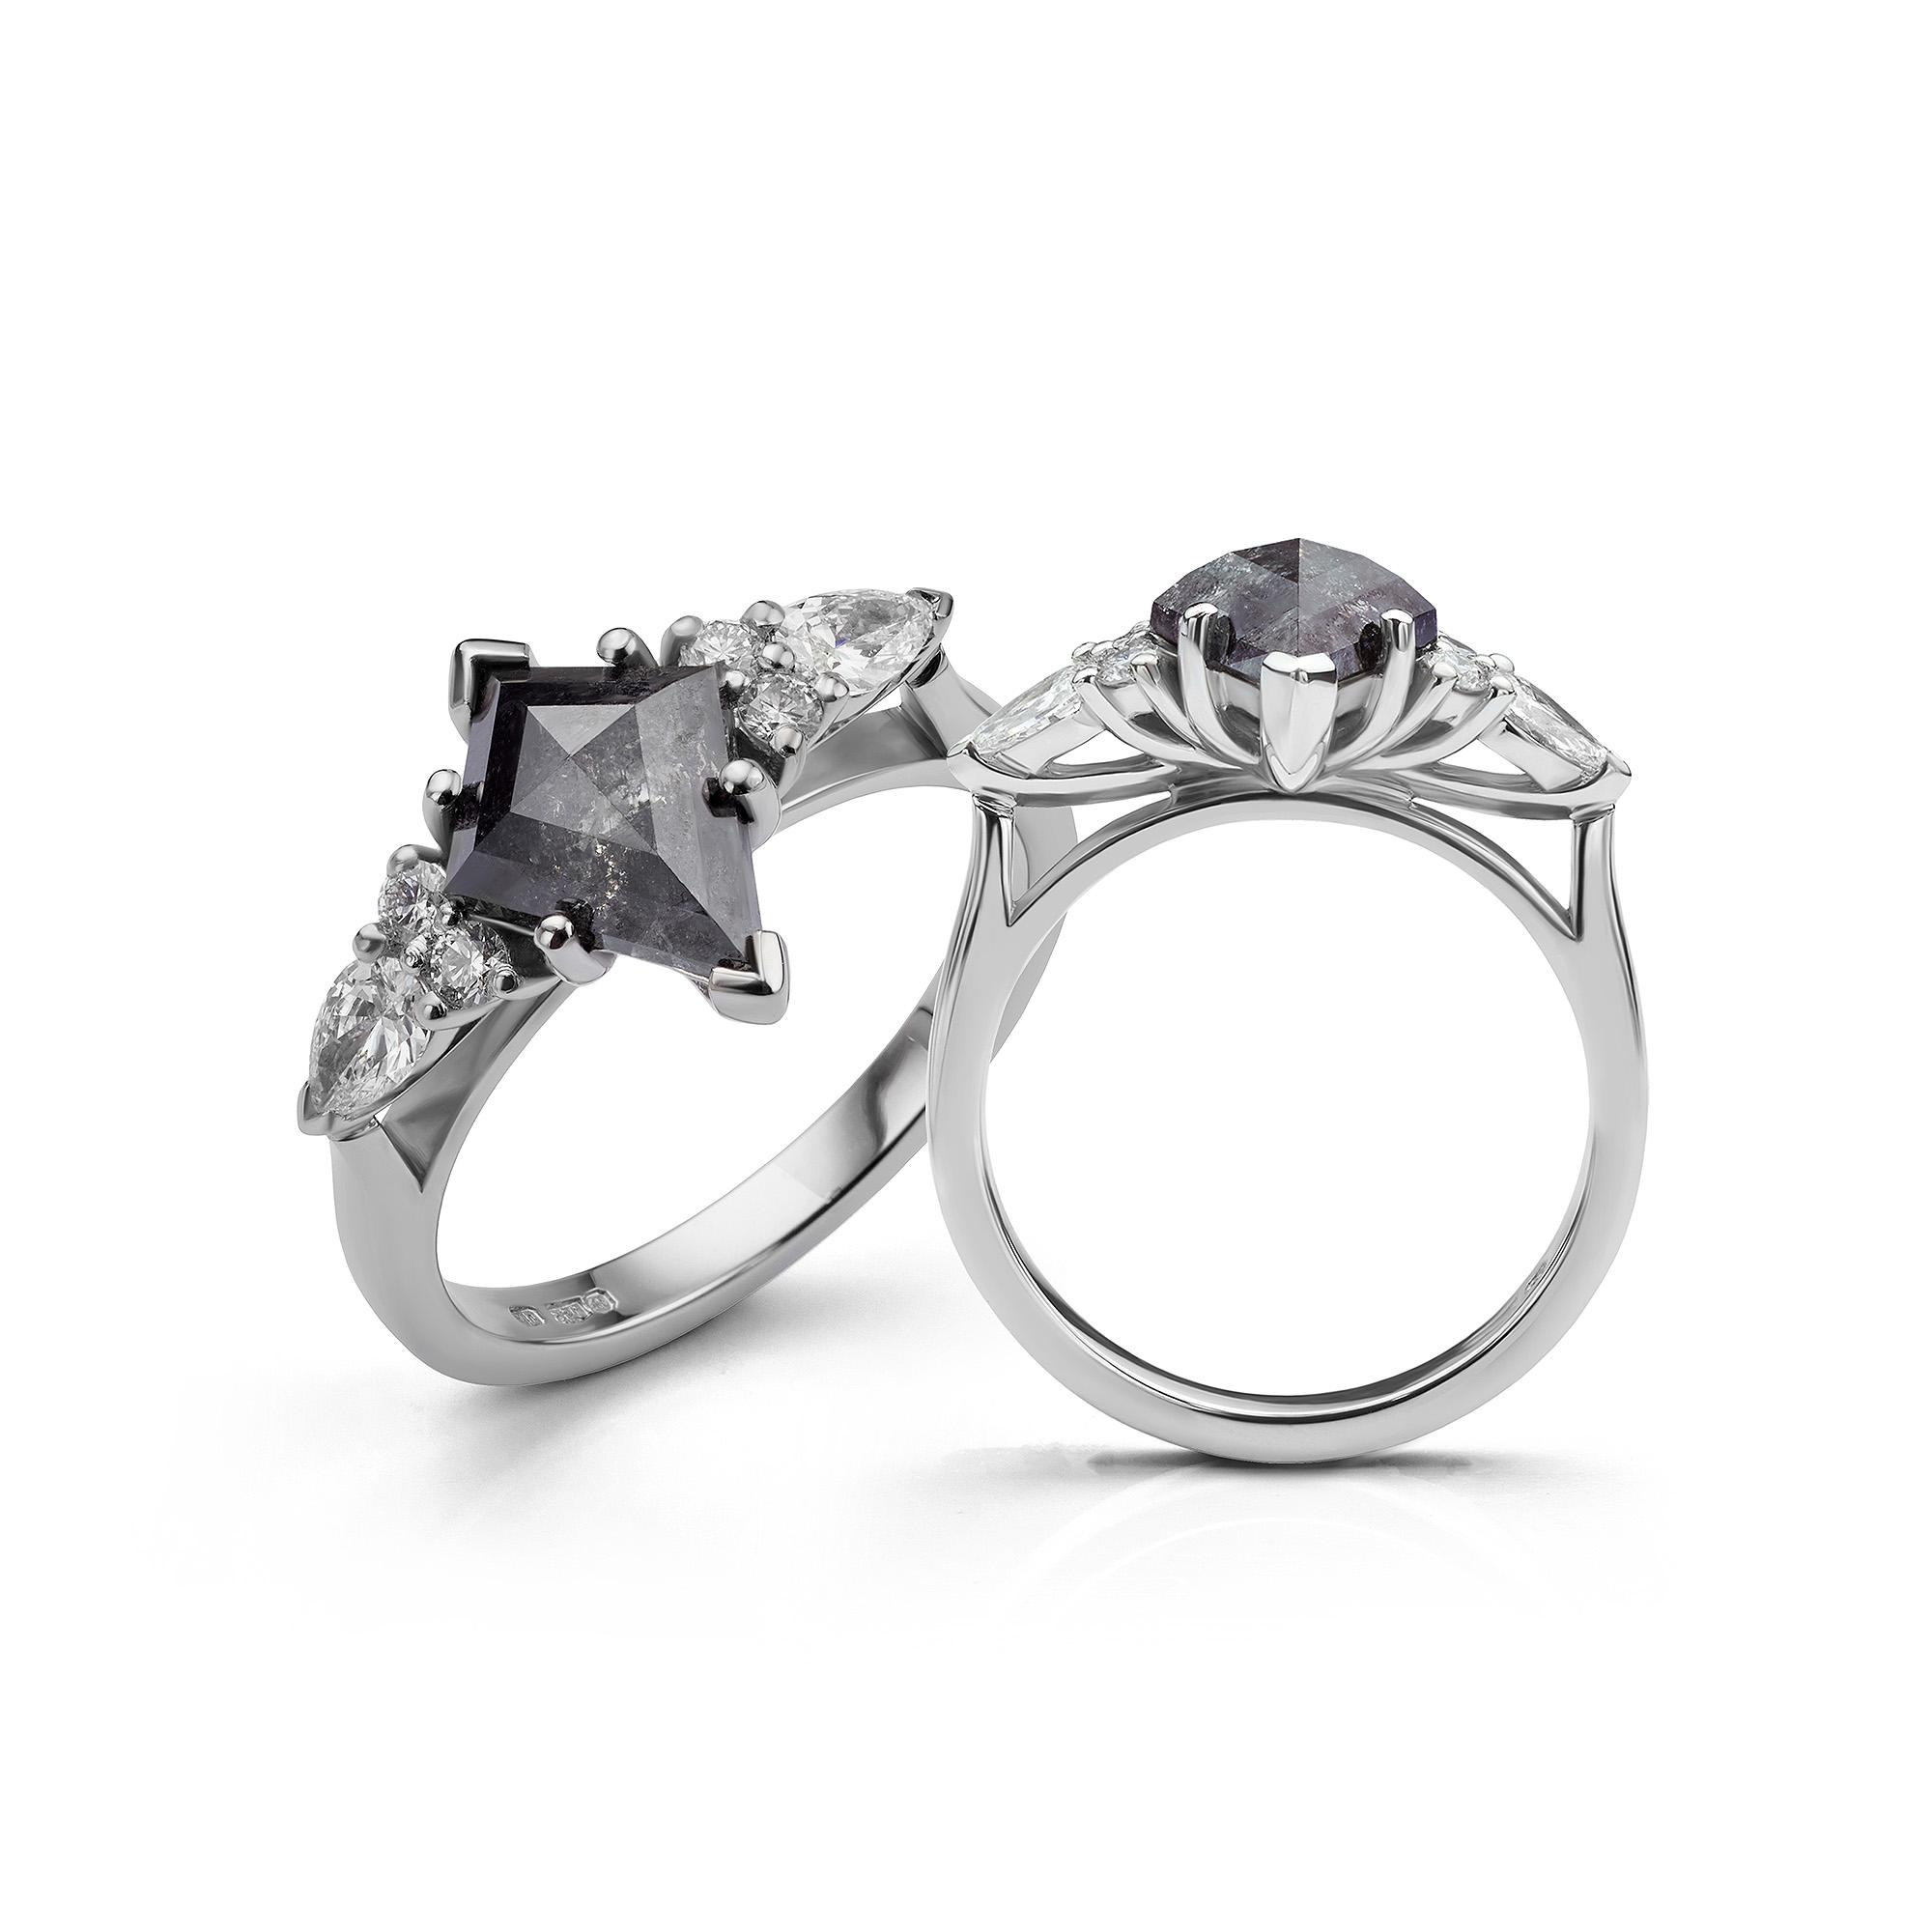 Salt and Pepper Galaxy Diamond Kite Shaped Engagement Ring Serendipity Diamonds Ryde 01983 567283